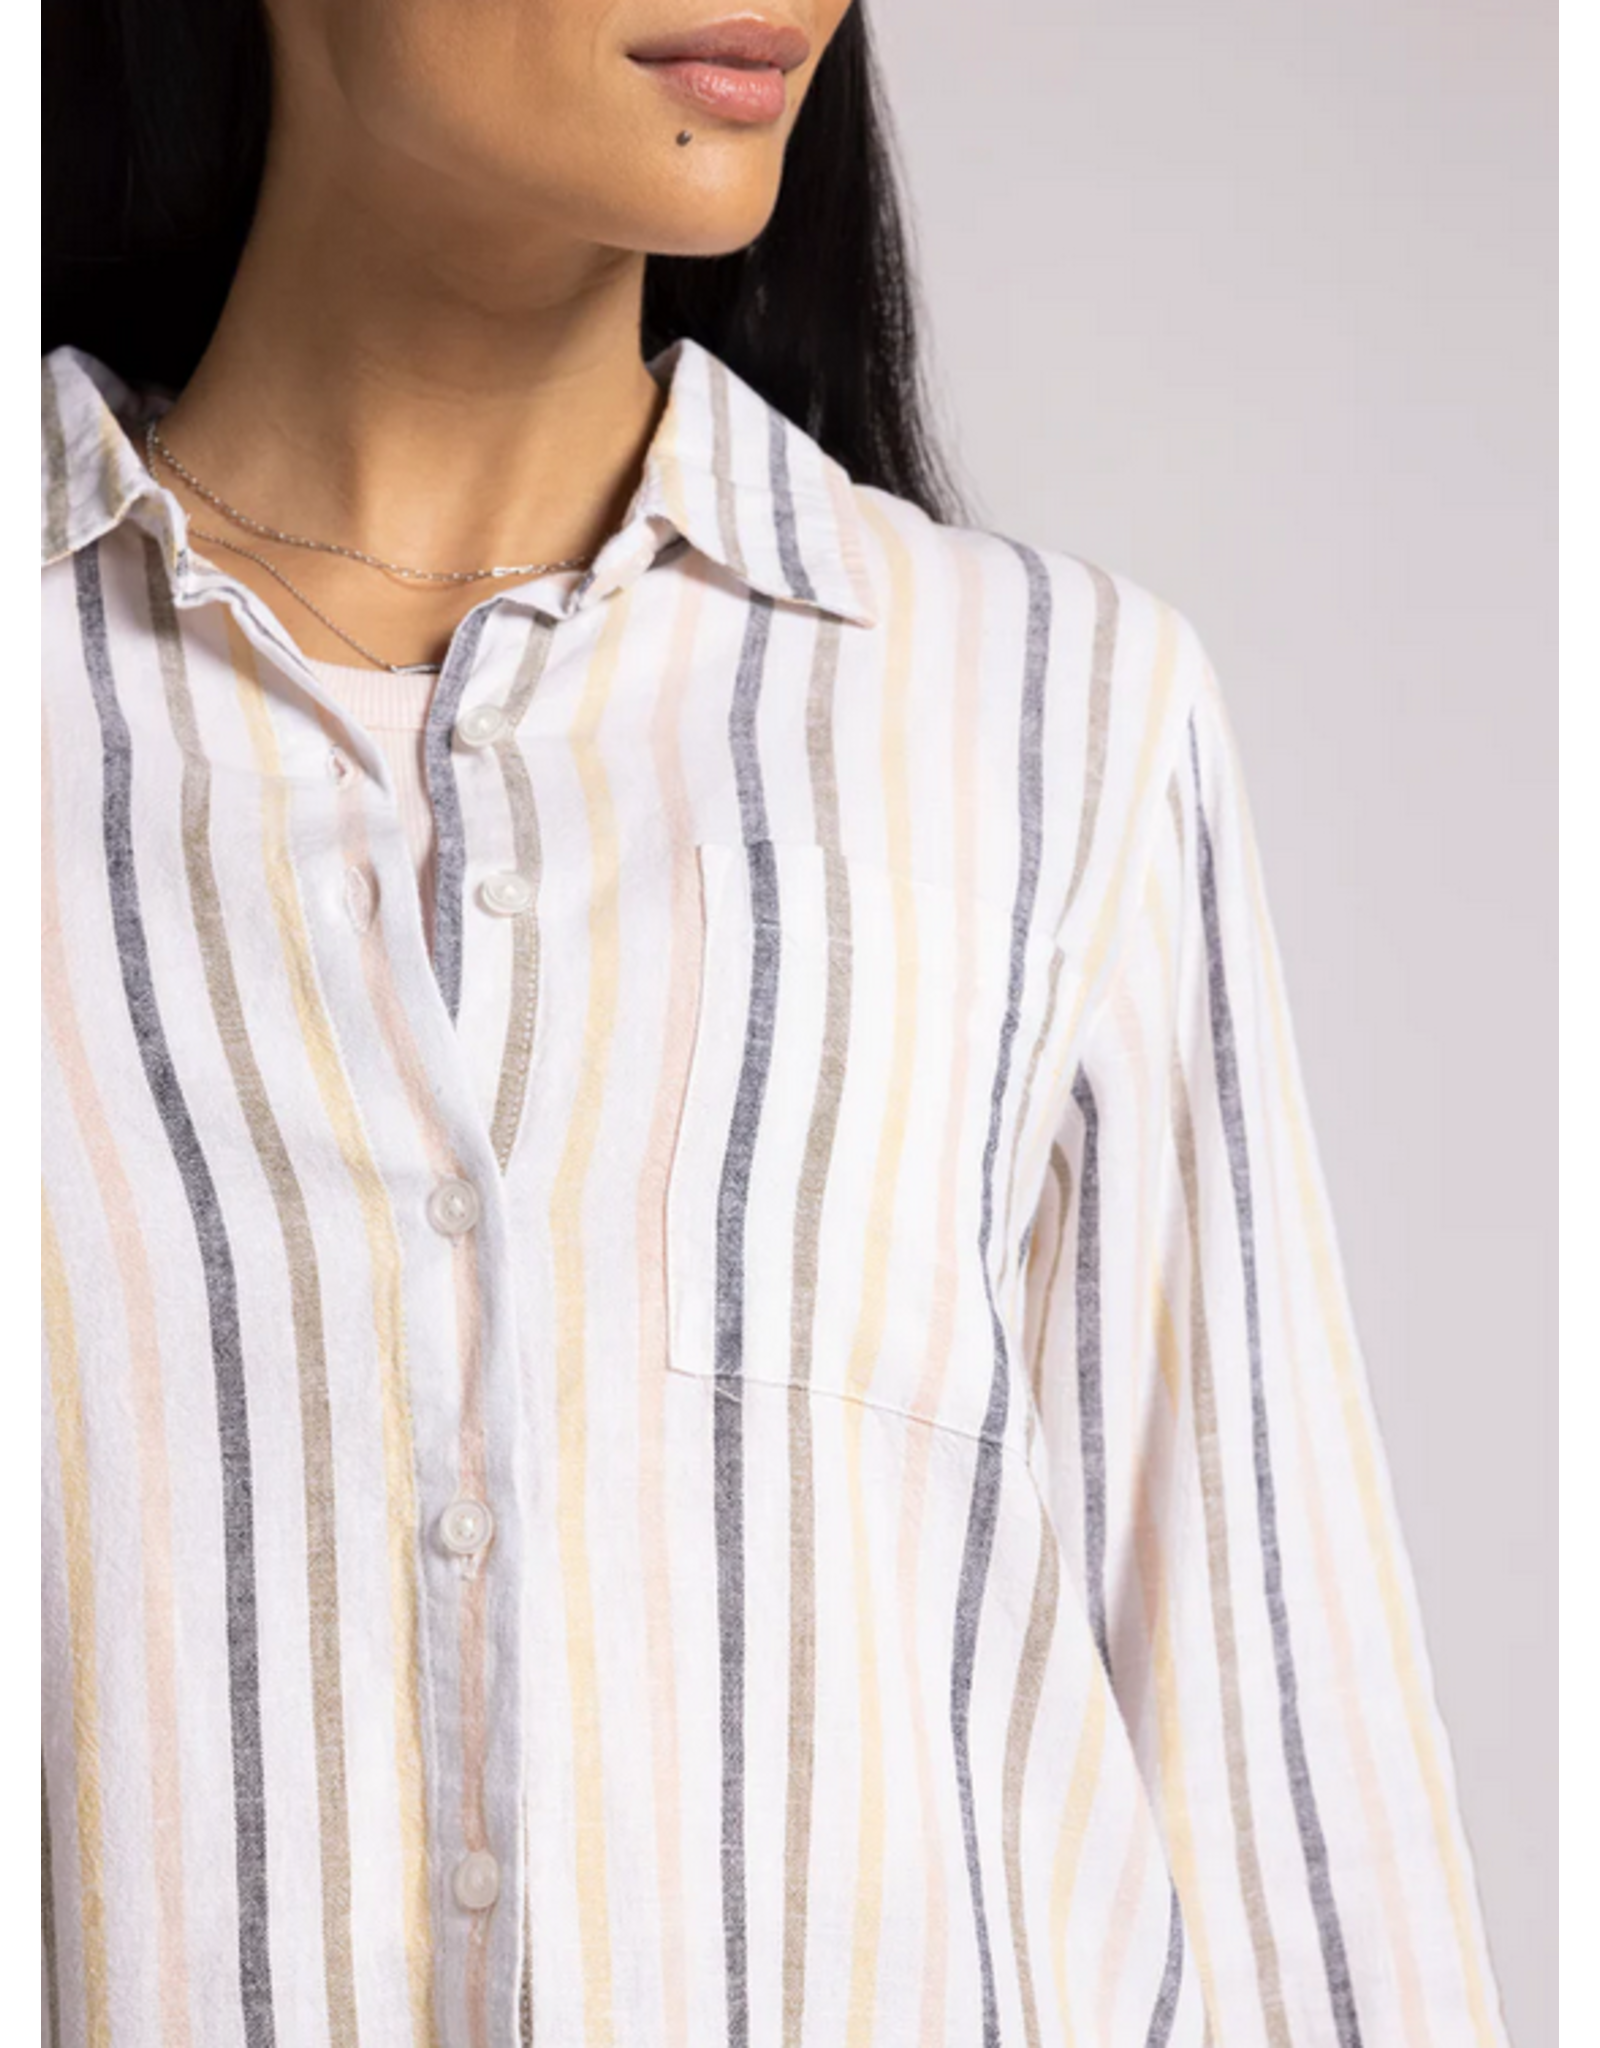 Thread & Supply Ashby Striped Shirt